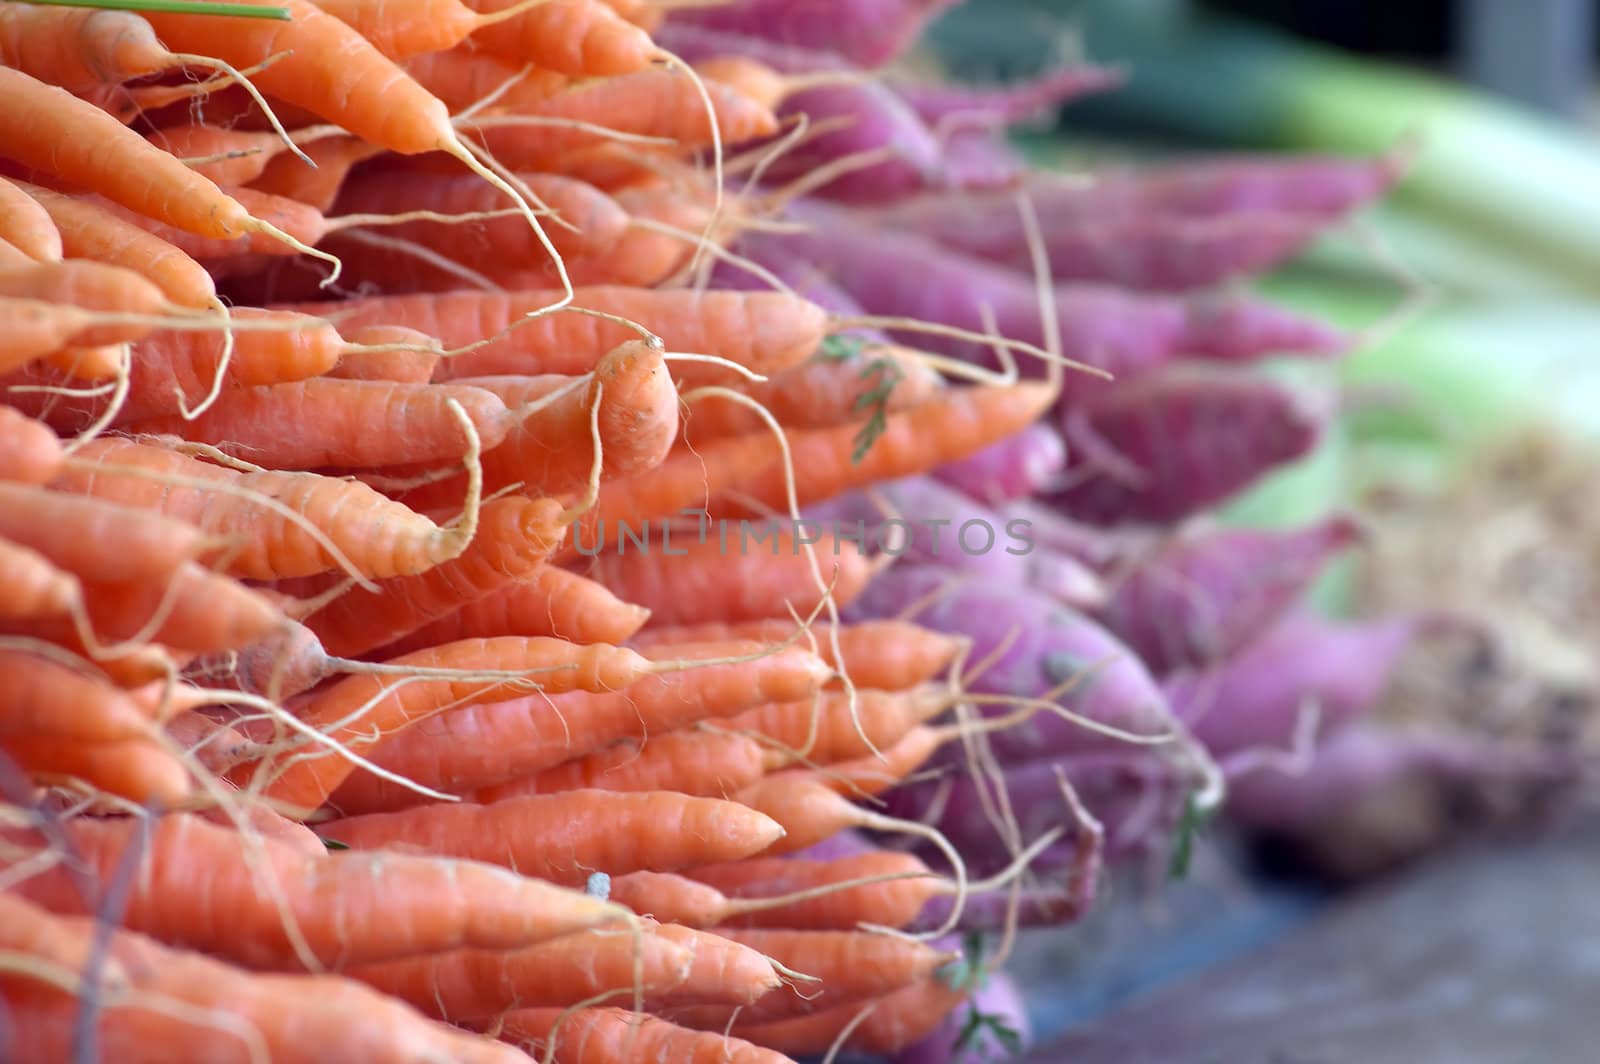 Fresh Carrots by Rainman